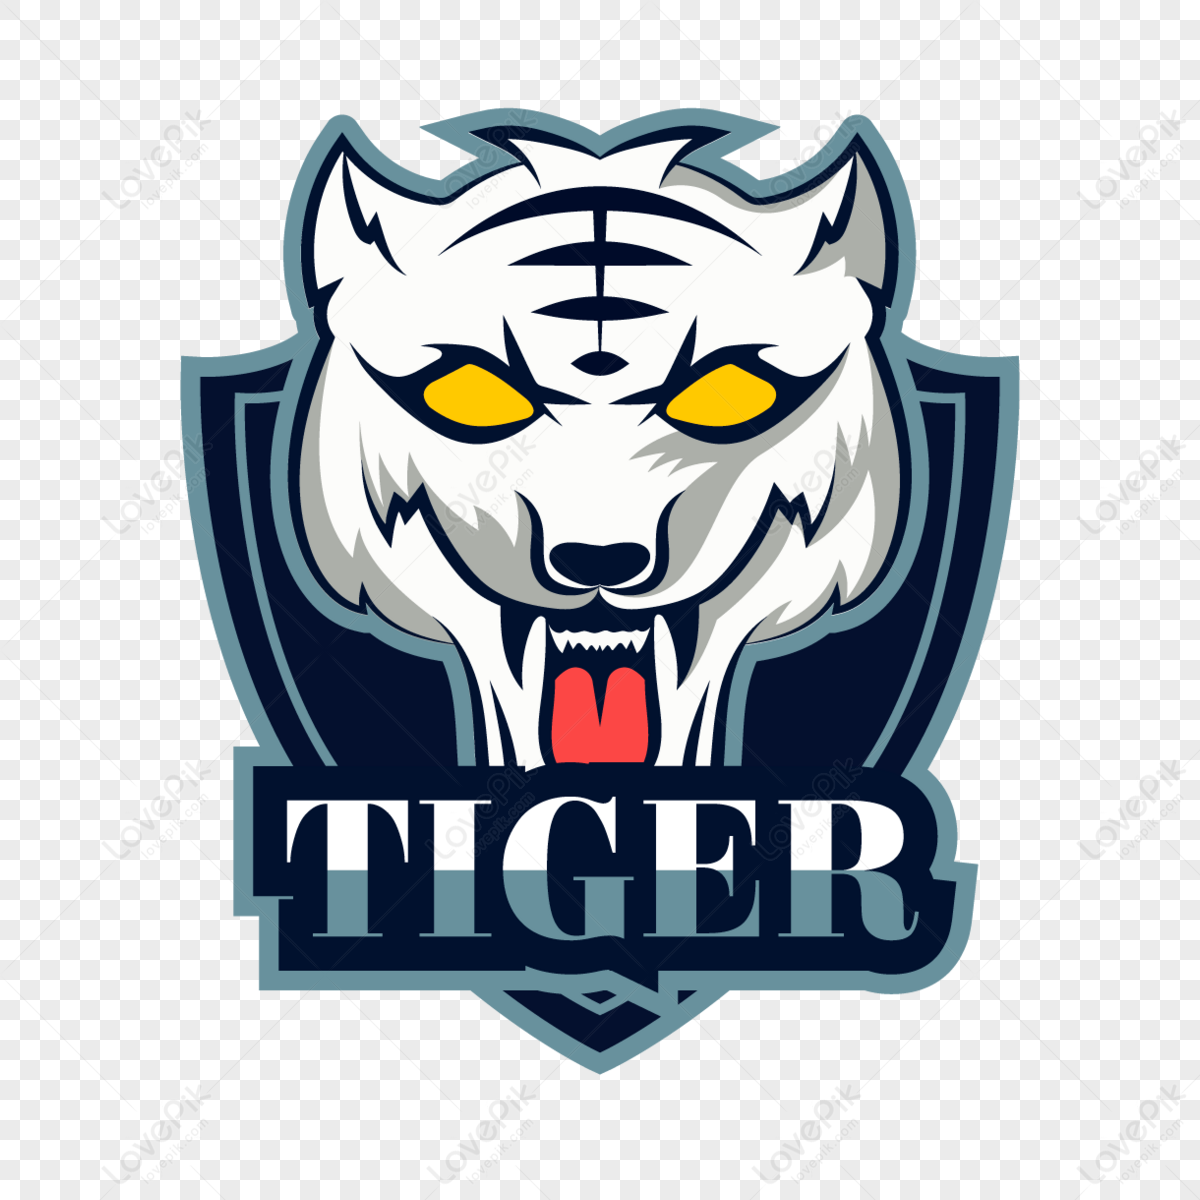 Tiger Symbol Logo PNG - Free Download | Tiger silhouette, Art, Graffiti art